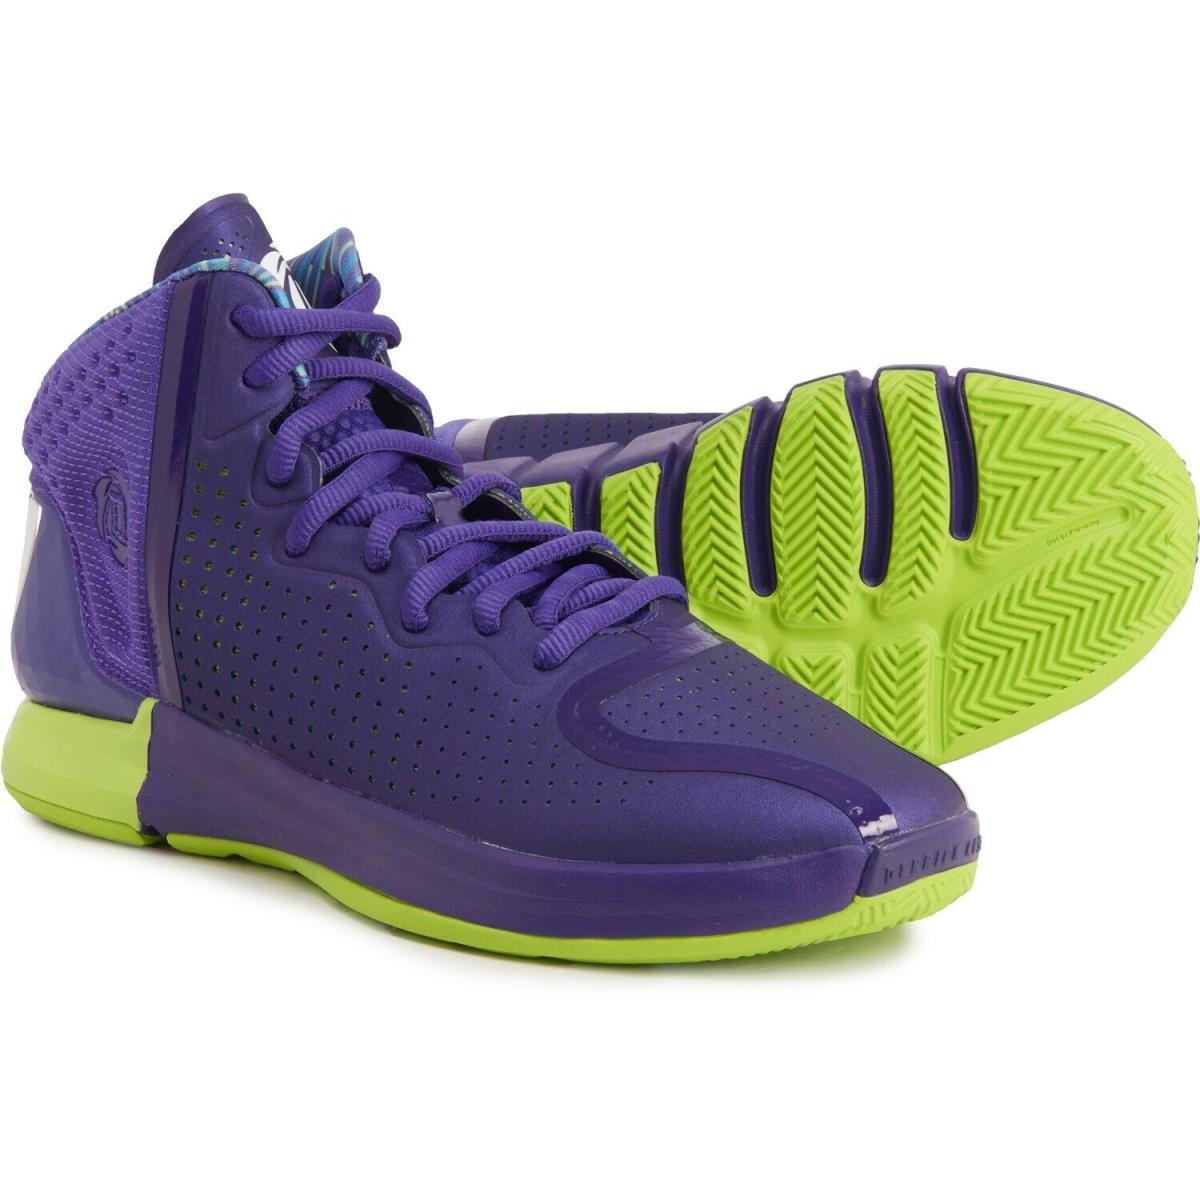 Adidas D Rose 4 Restomod Basketball Shoes For Men Size 14